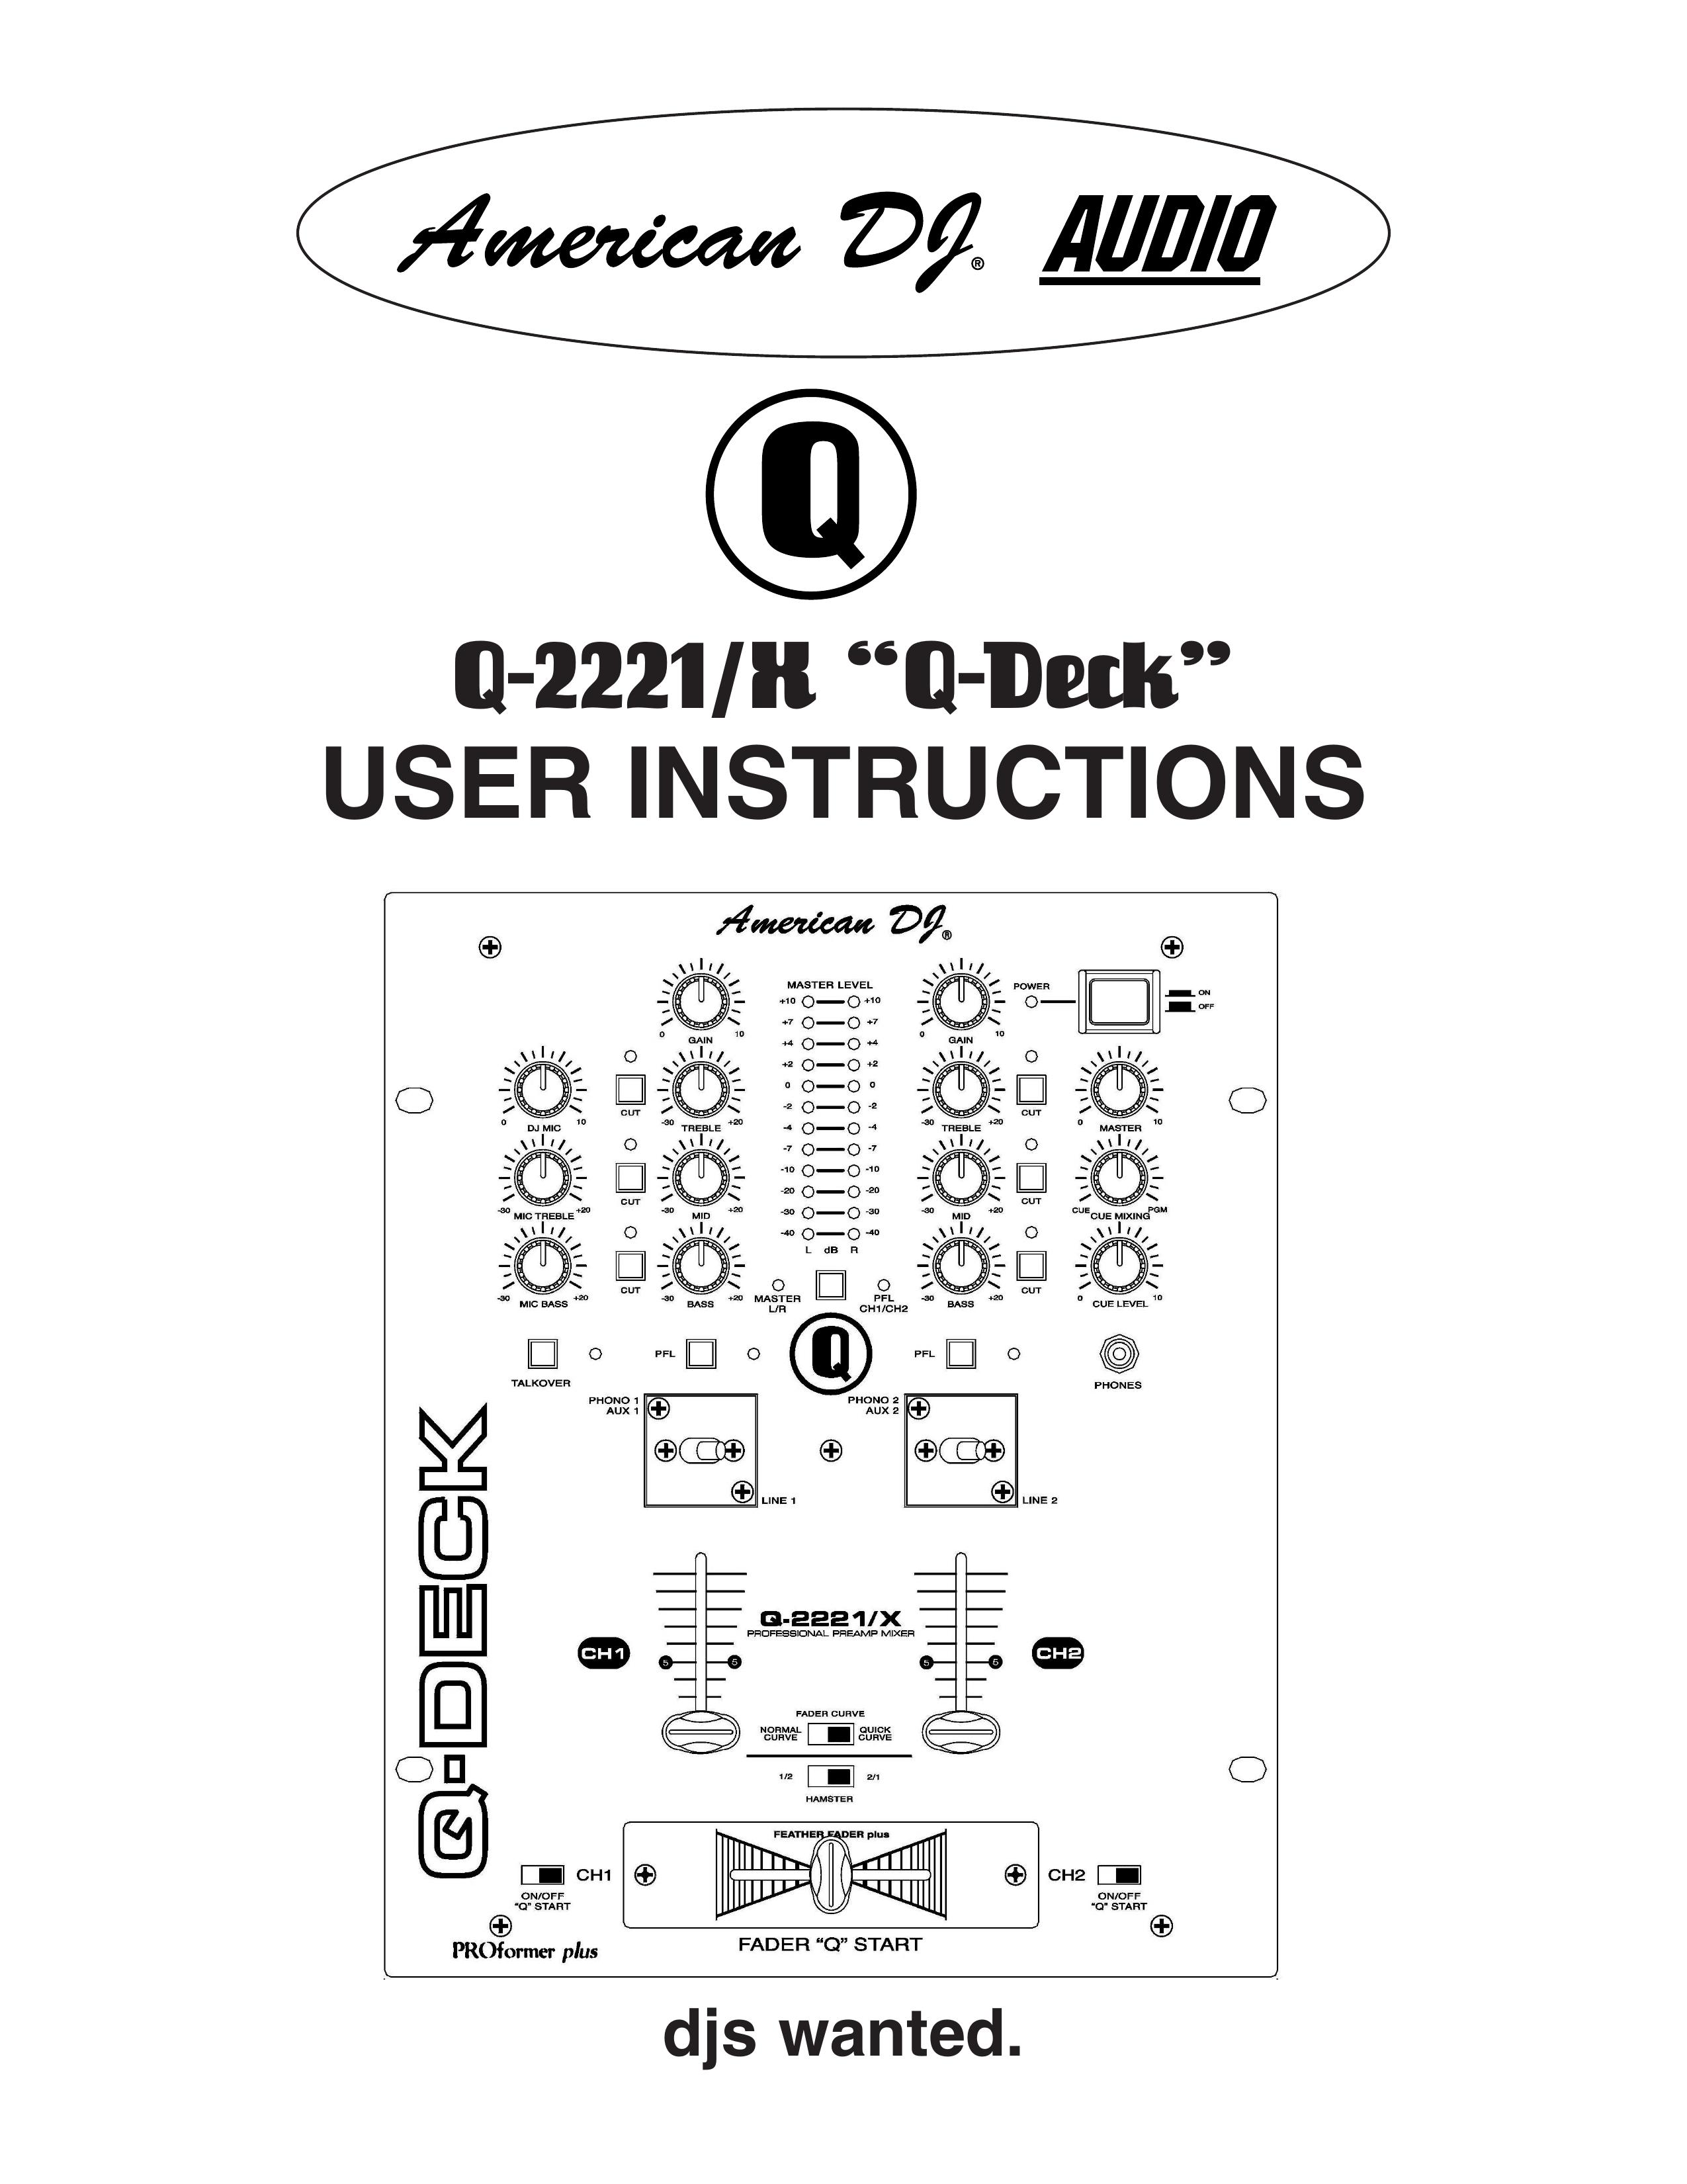 American Audio Q-2221/X DJ Equipment User Manual (Page 1)